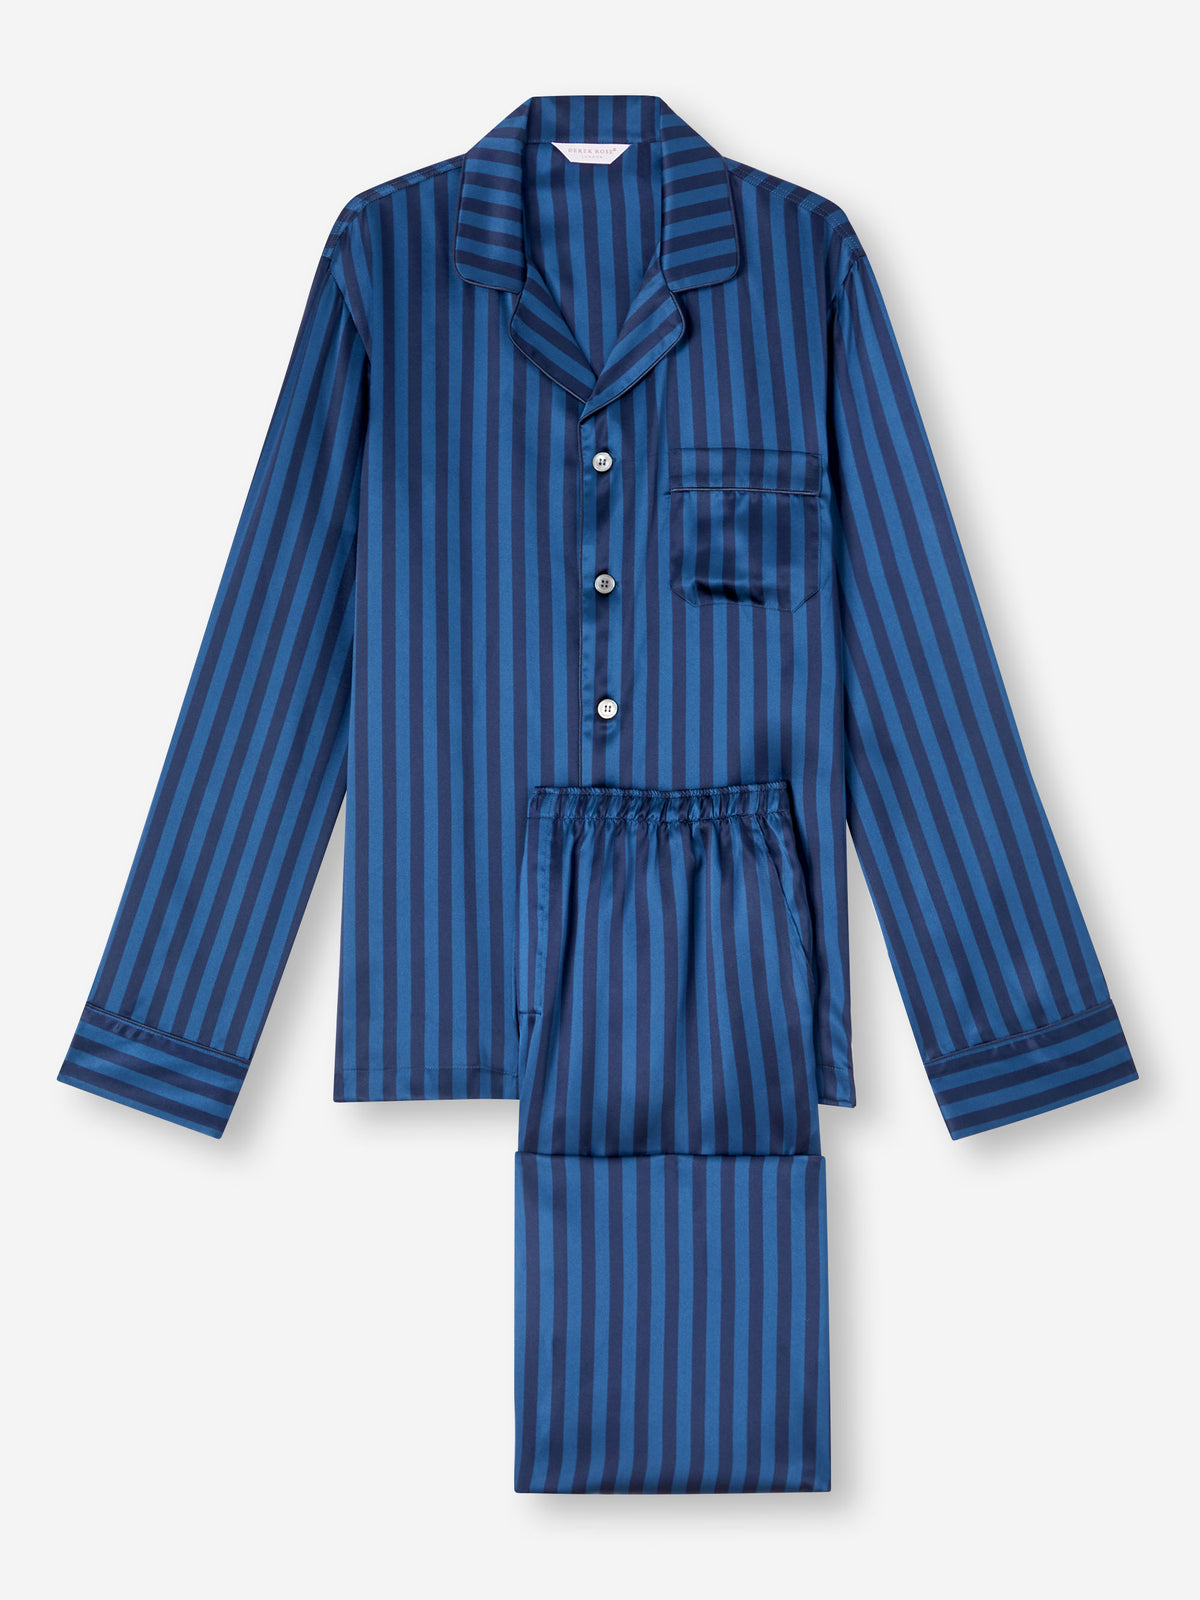 Men's Pyjamas Brindisi 92 Silk Satin Navy